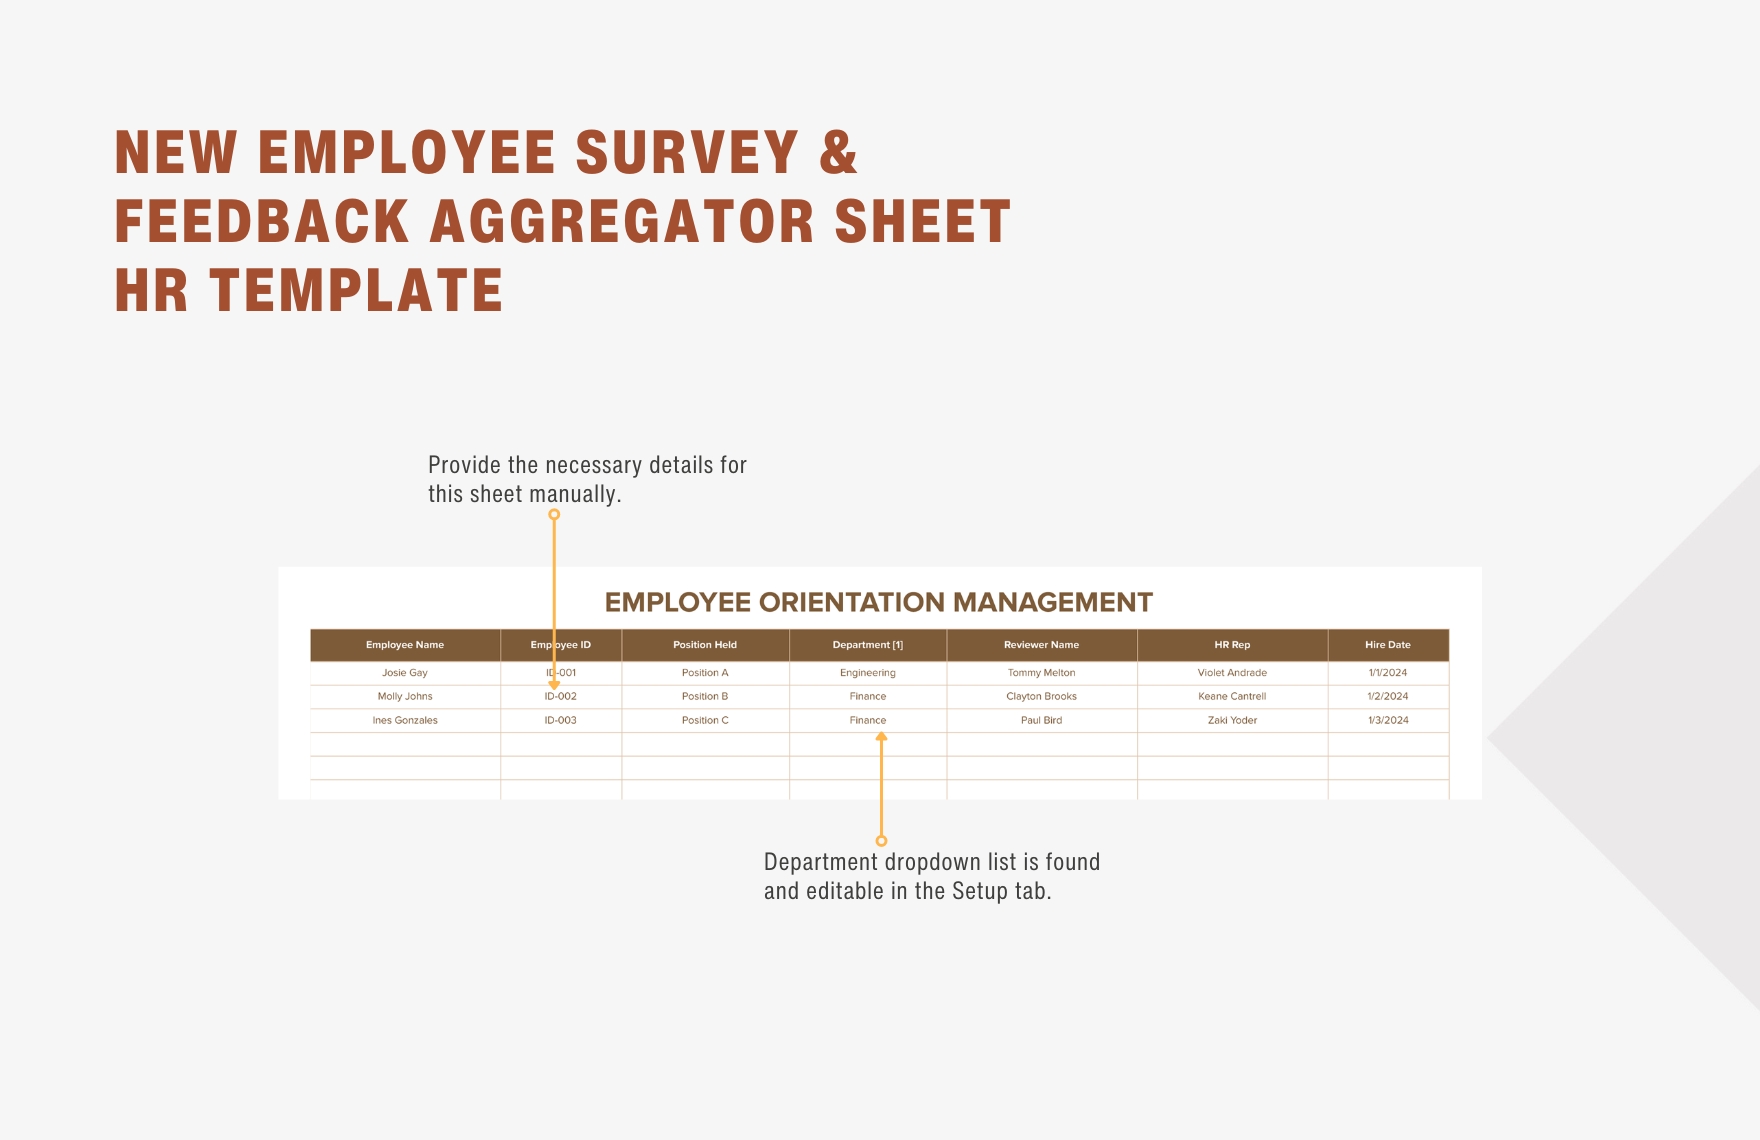 New Employee Survey & Feedback Aggregator Sheet HR Template